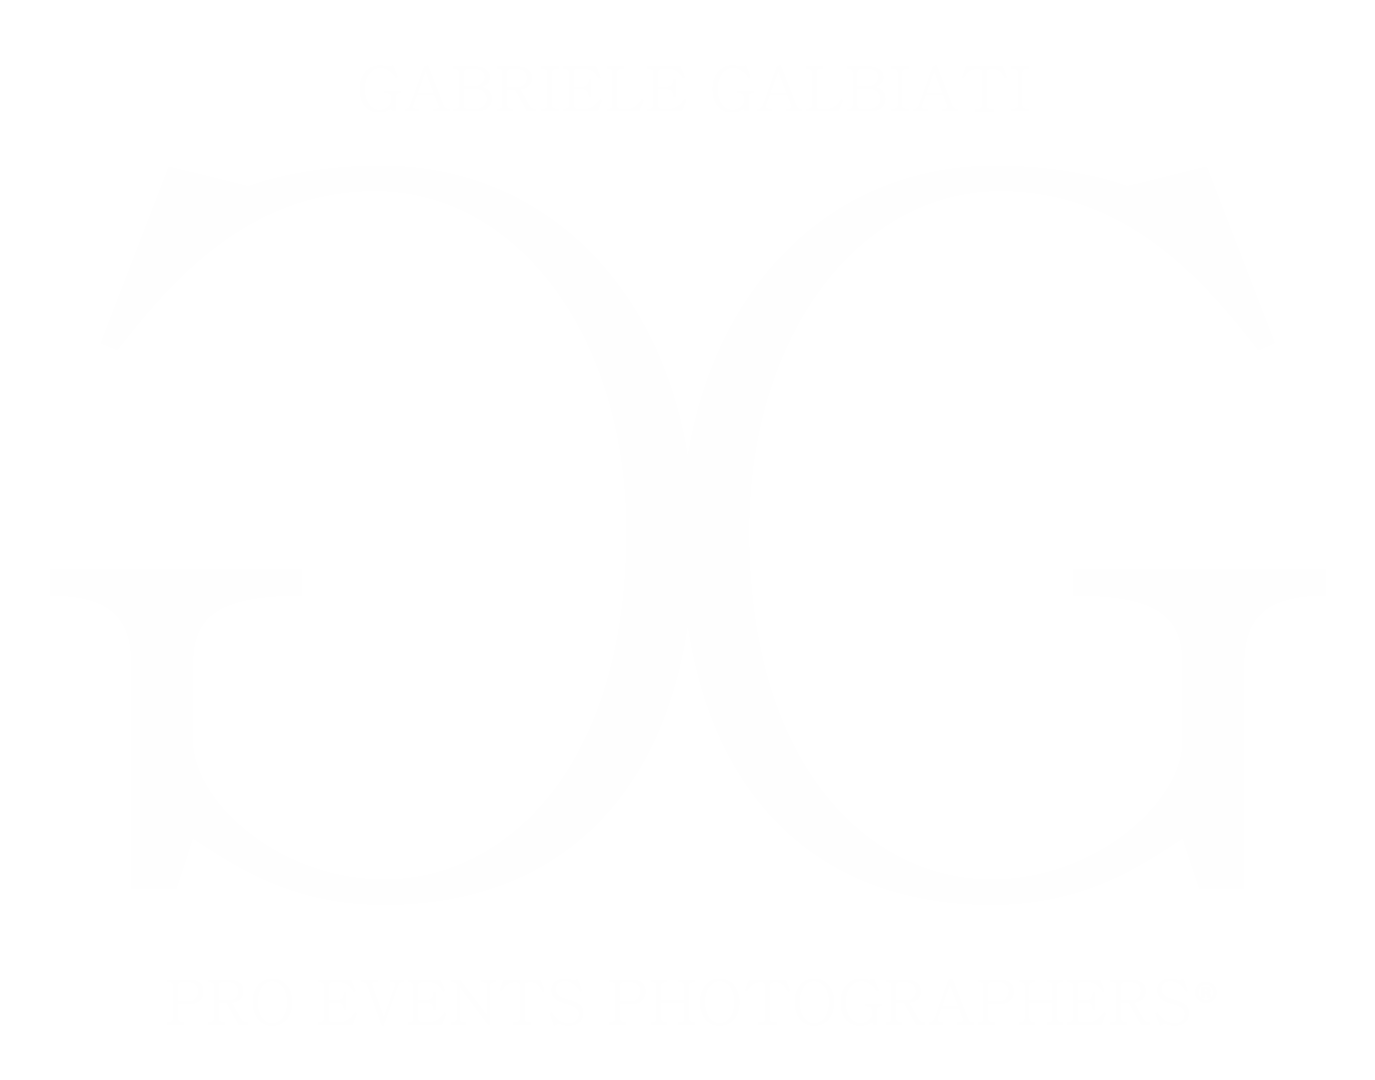 Gabriele Galbiati Pro Events Photographers®